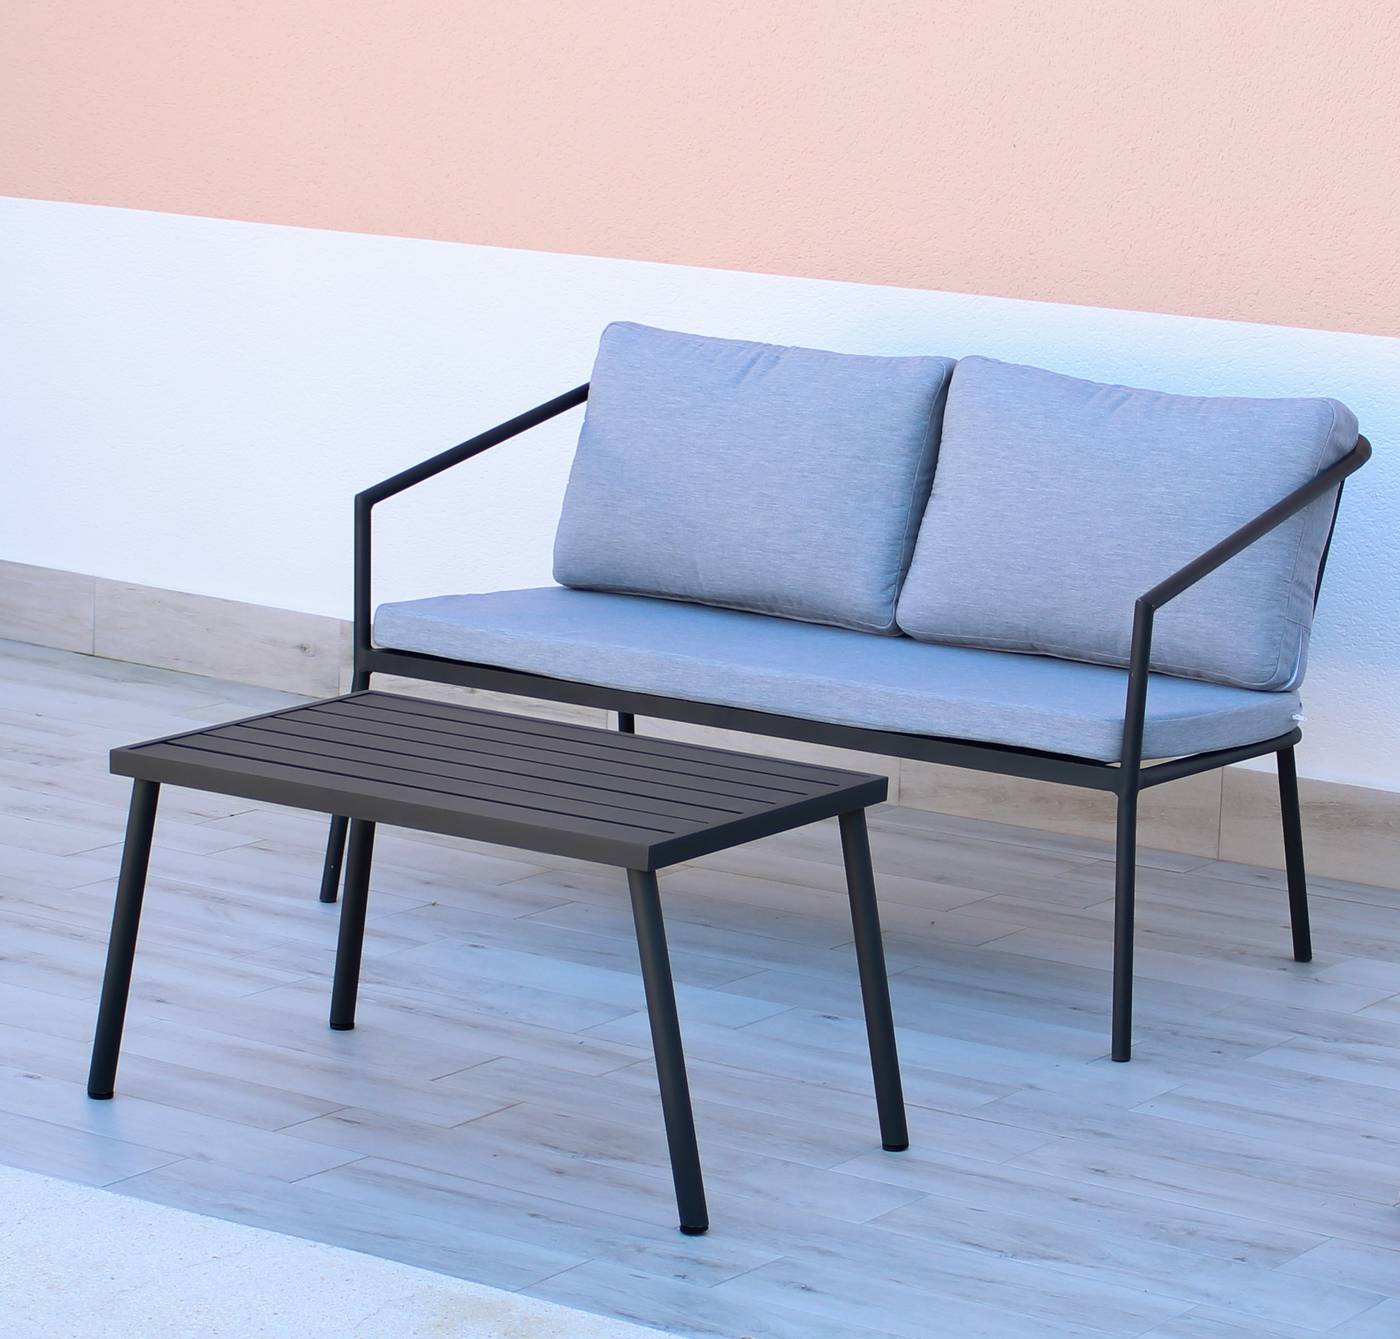 Set Aluminio Bermudas-7 - Conjunto: 1 sofá 2 plazas + 2 sillones + 1 mesa de centro + cojines. Estructura aluminio color blanco o antracita.